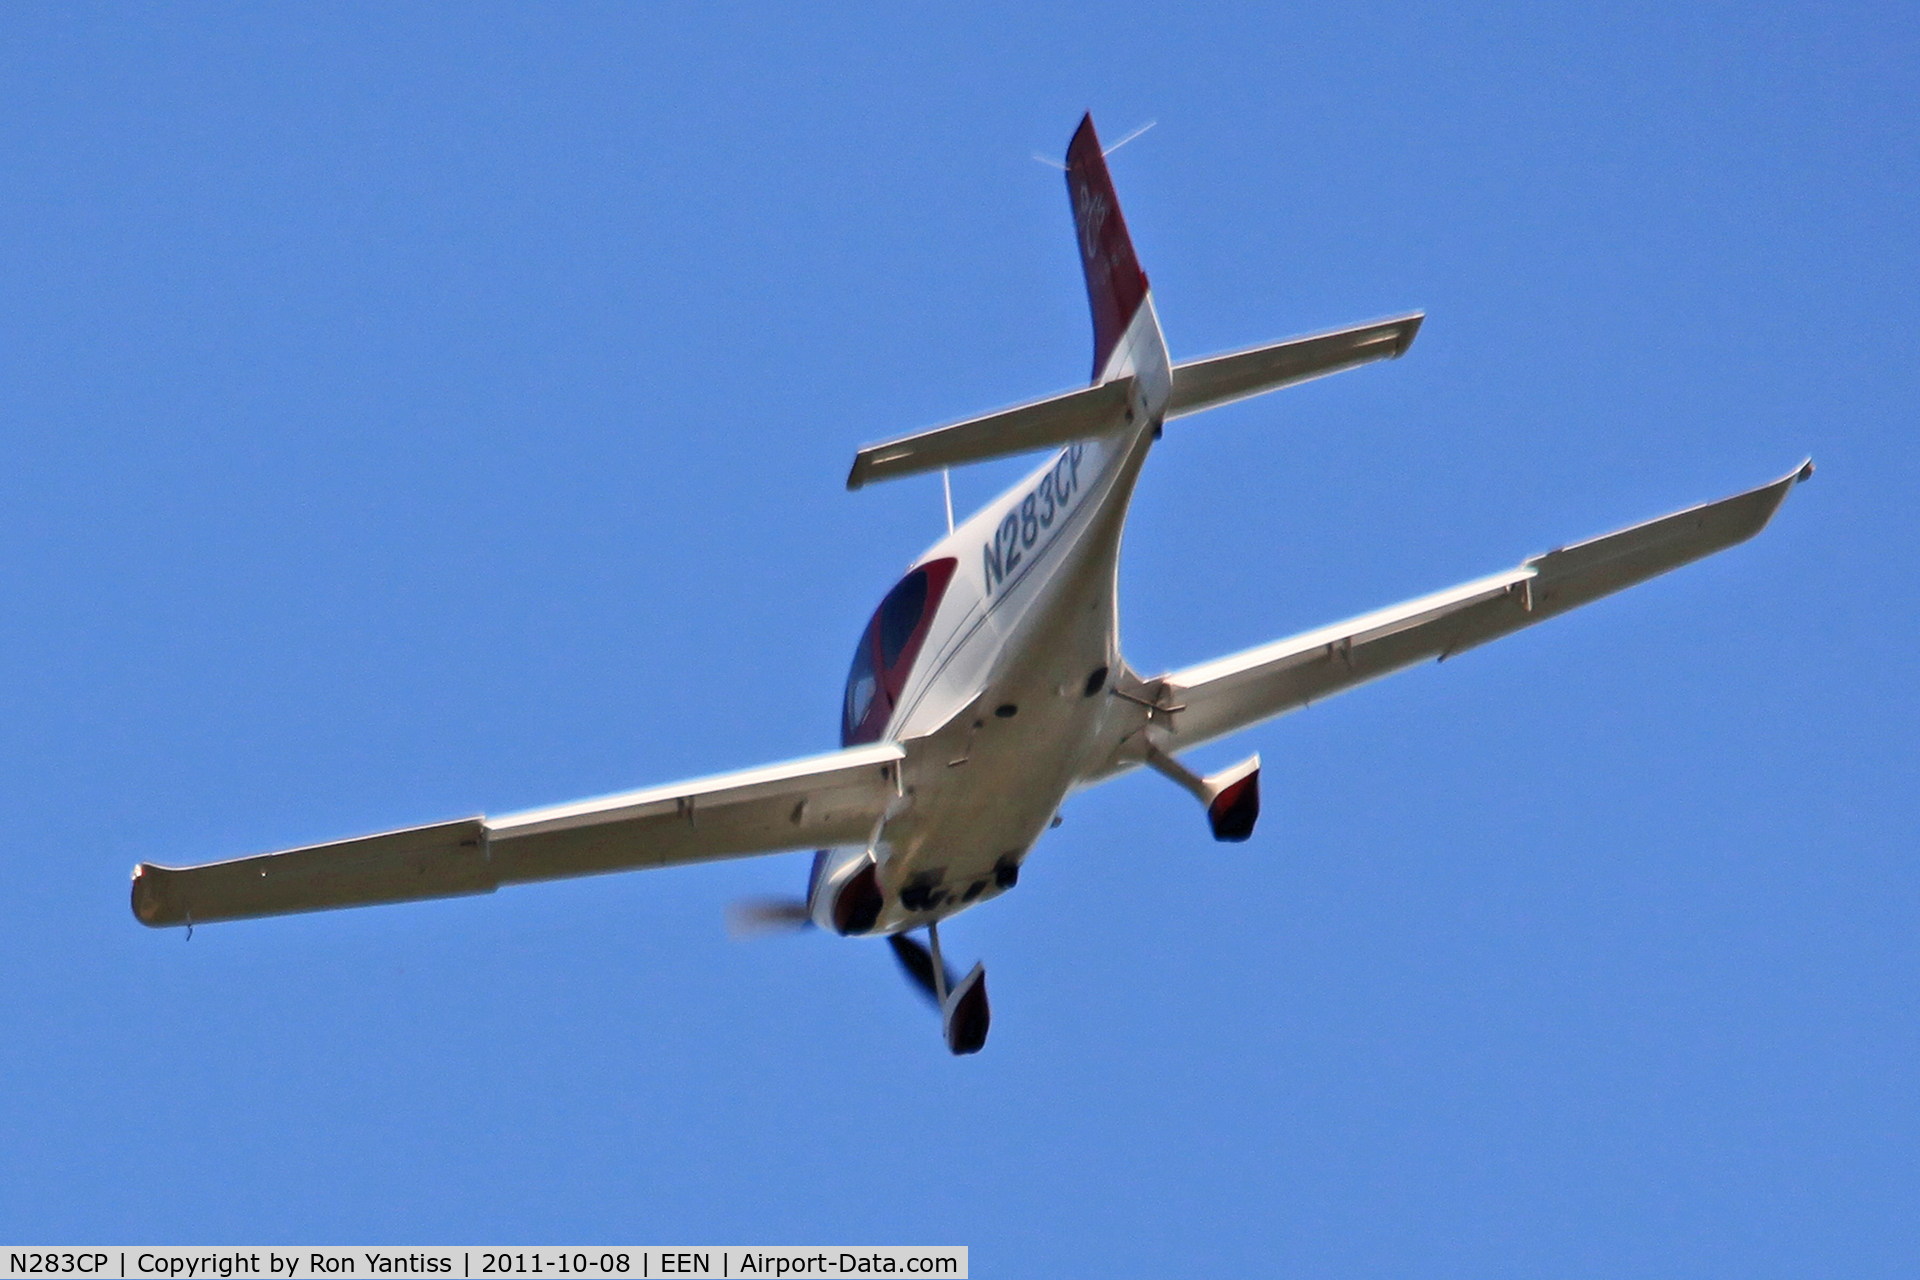 N283CP, 2008 Cirrus SR22 C/N 3224, Left downwind turning base for runway 02, Dillant-Hopkins Airport, Keene, NH